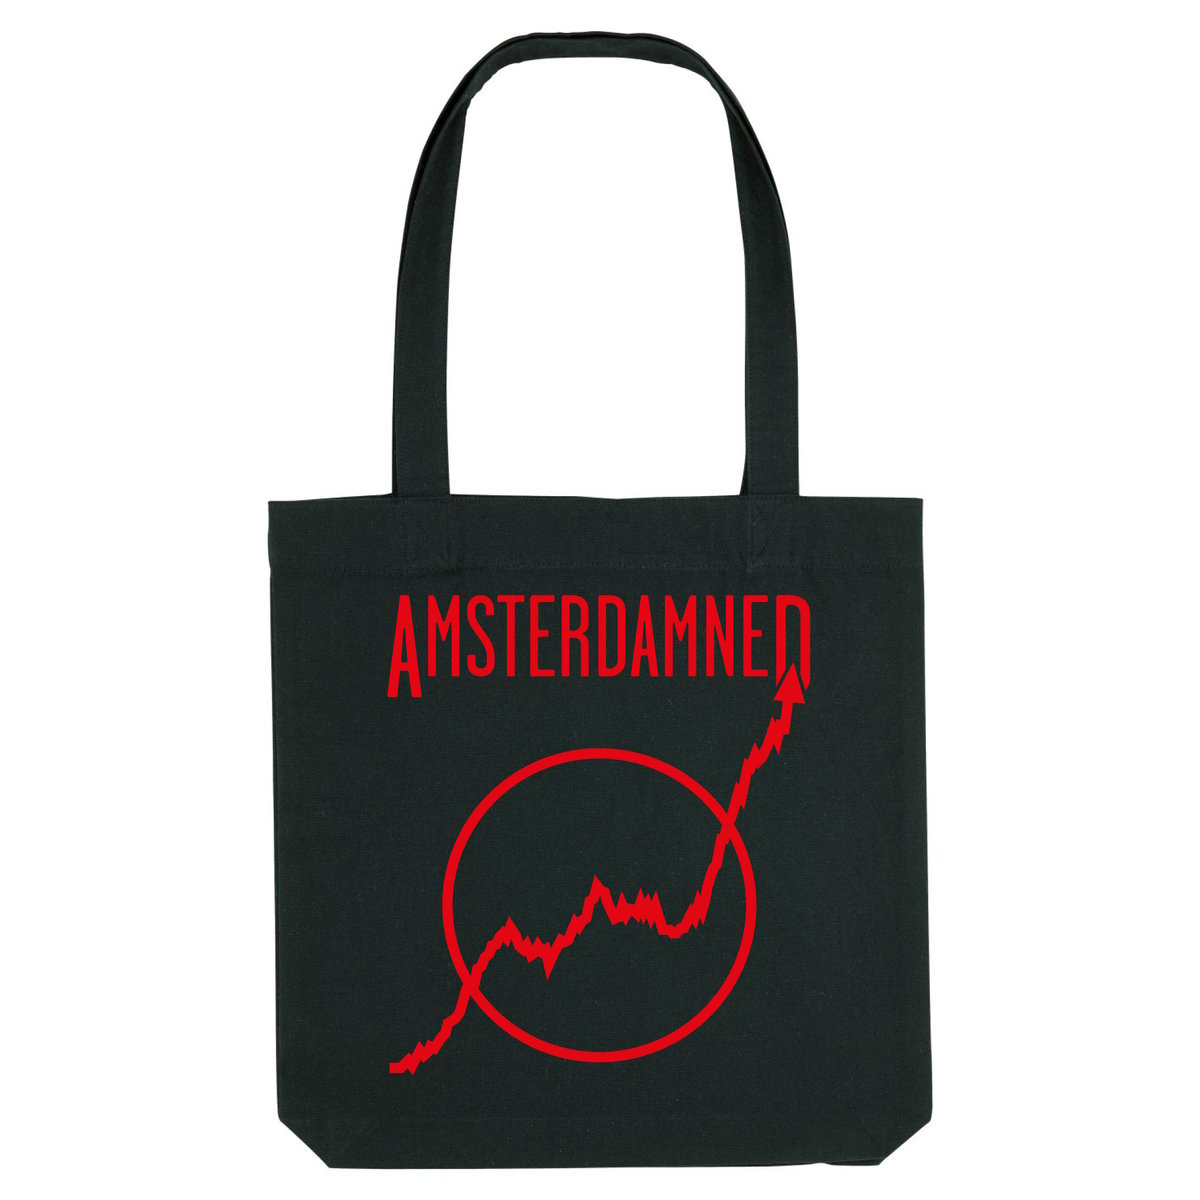 Amsterdamned Tote Bag